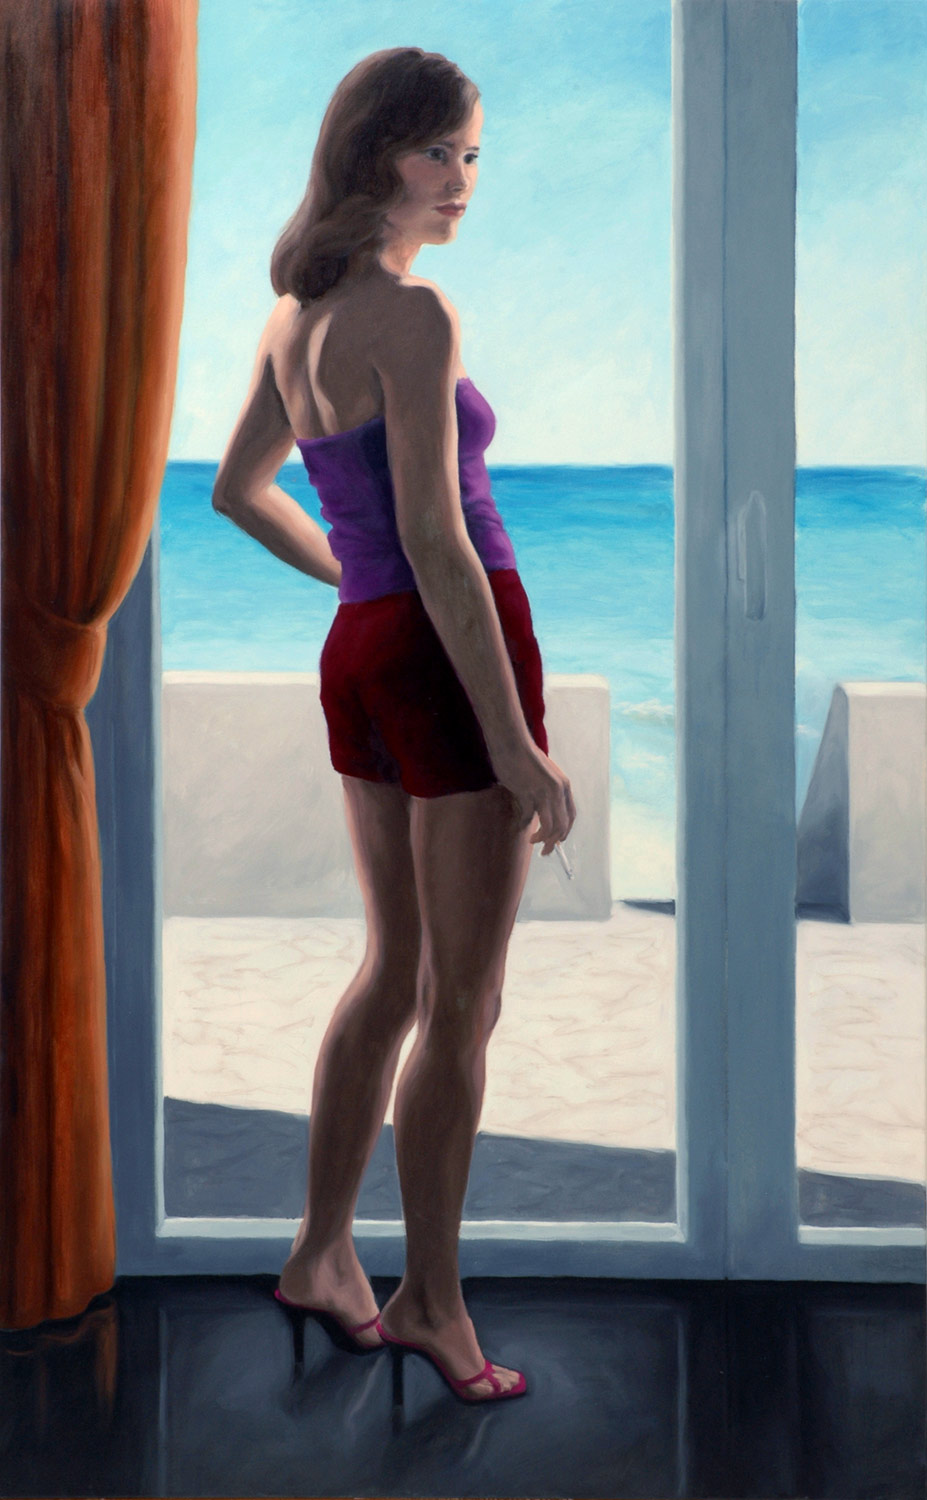 Martina Büttner painting sea view